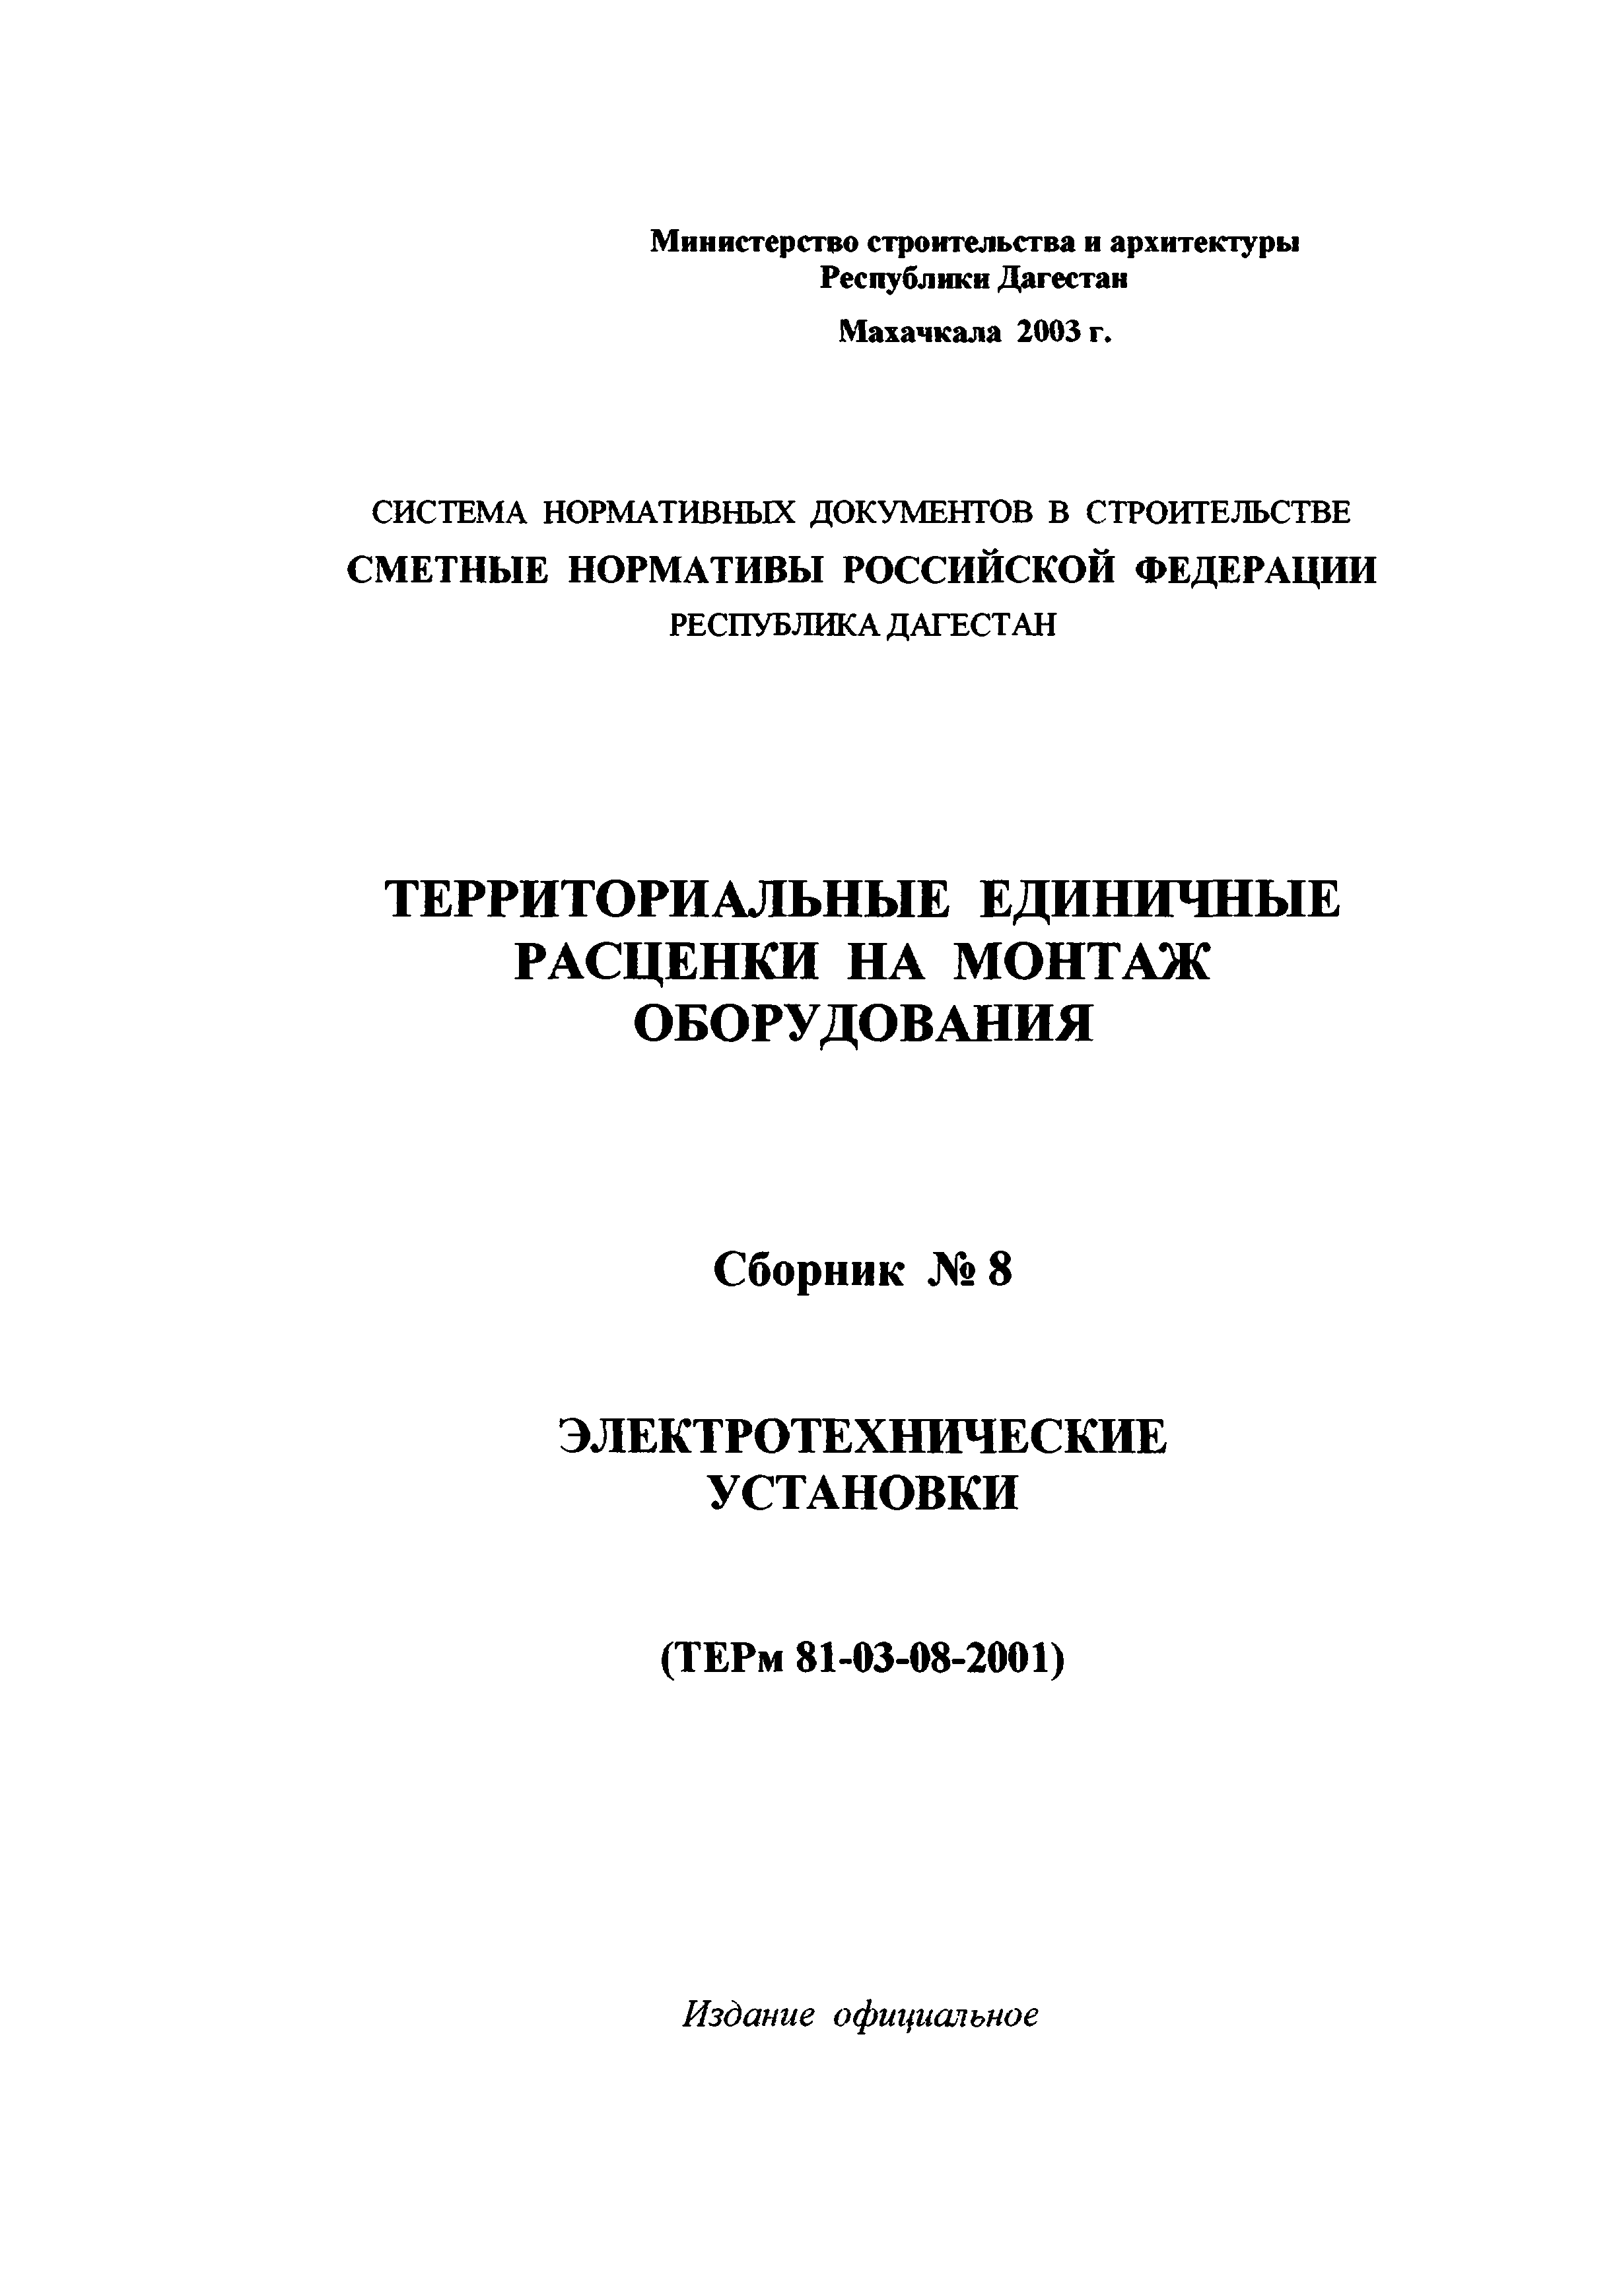 ТЕРм Республика Дагестан 2001-08